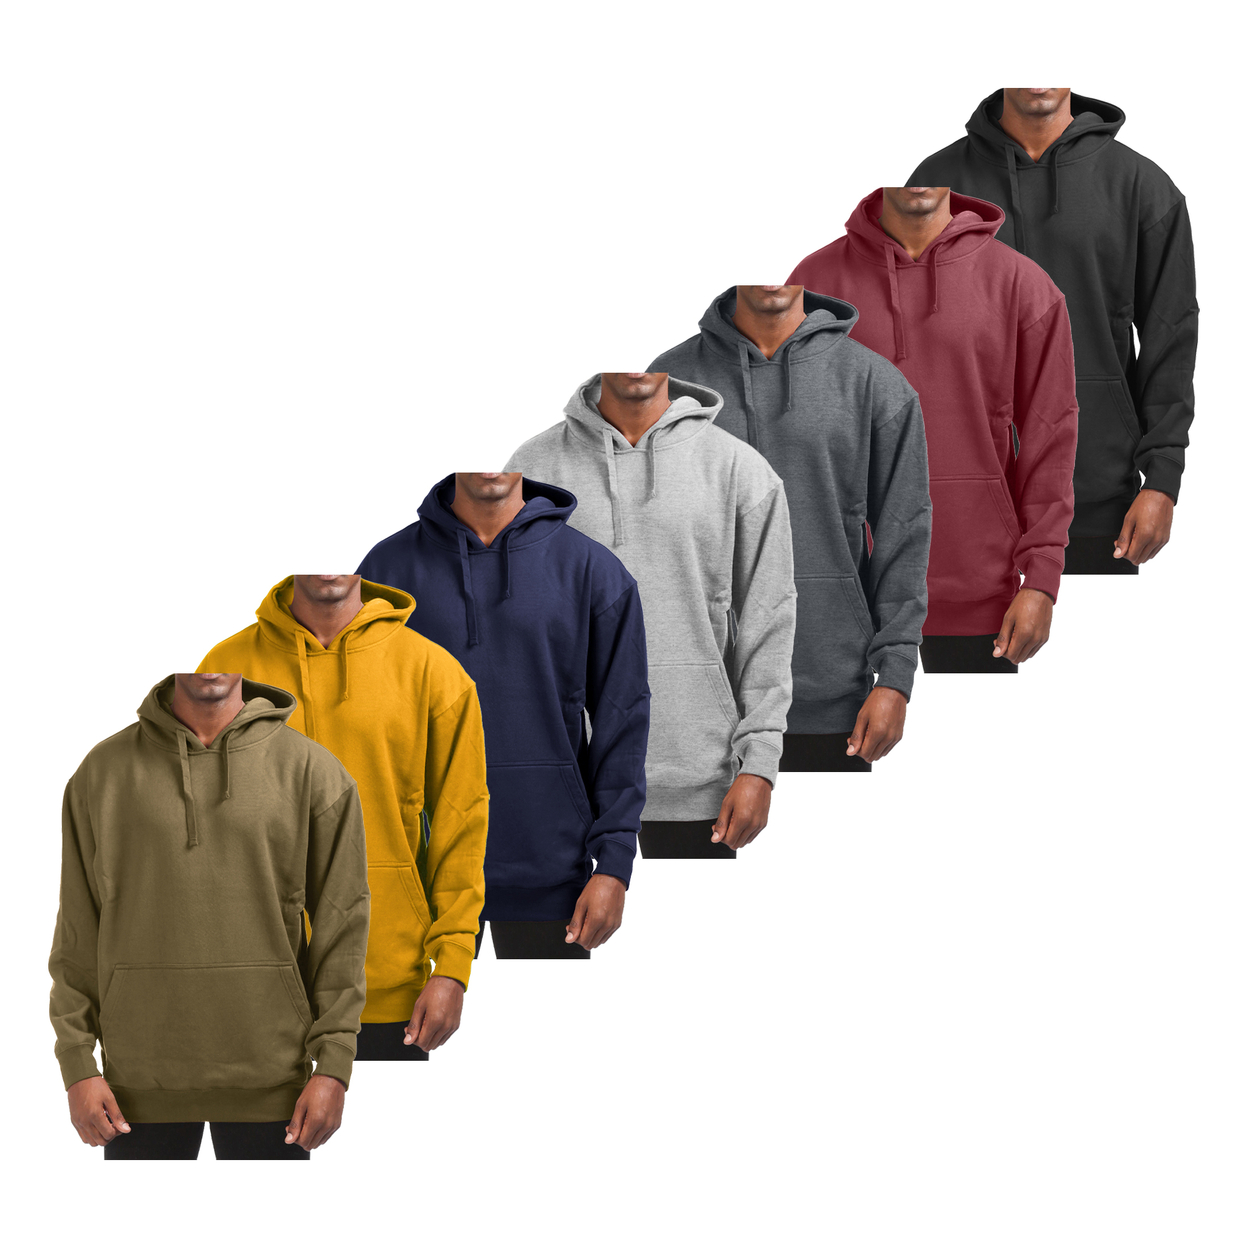 2-Pack: Men's Super-Soft Winter Warm Cotton-Blend Fleece Pullover Hoodie With Kangaroo Pocket - Black & Black, 3x-large